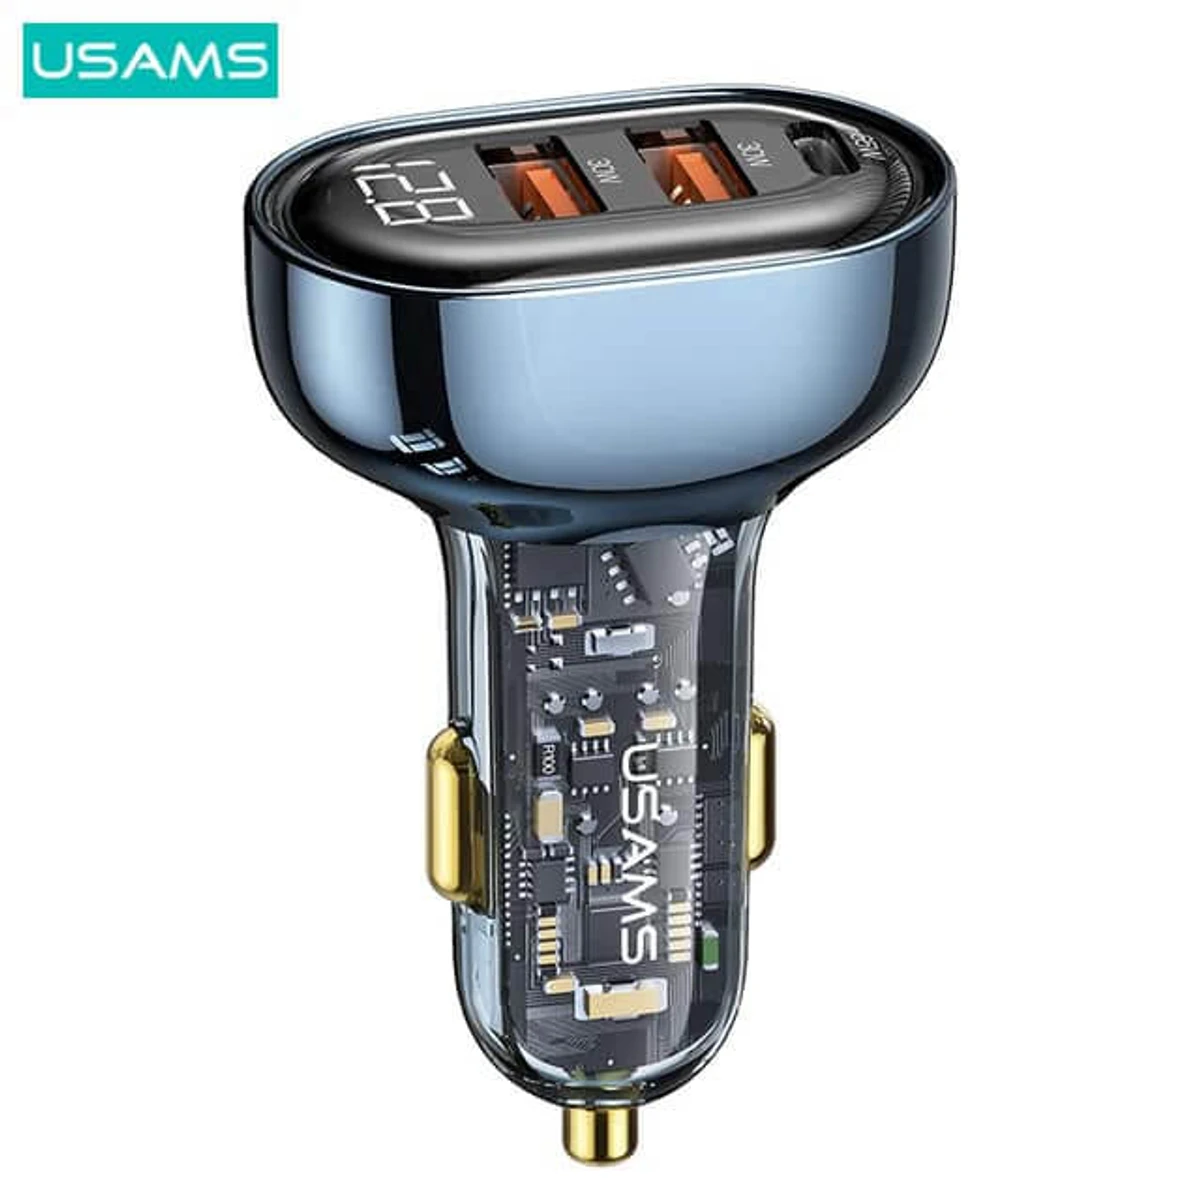 USAMS US-CC158 125W 3 Ports Transparent Digital Display Fast Car Charger